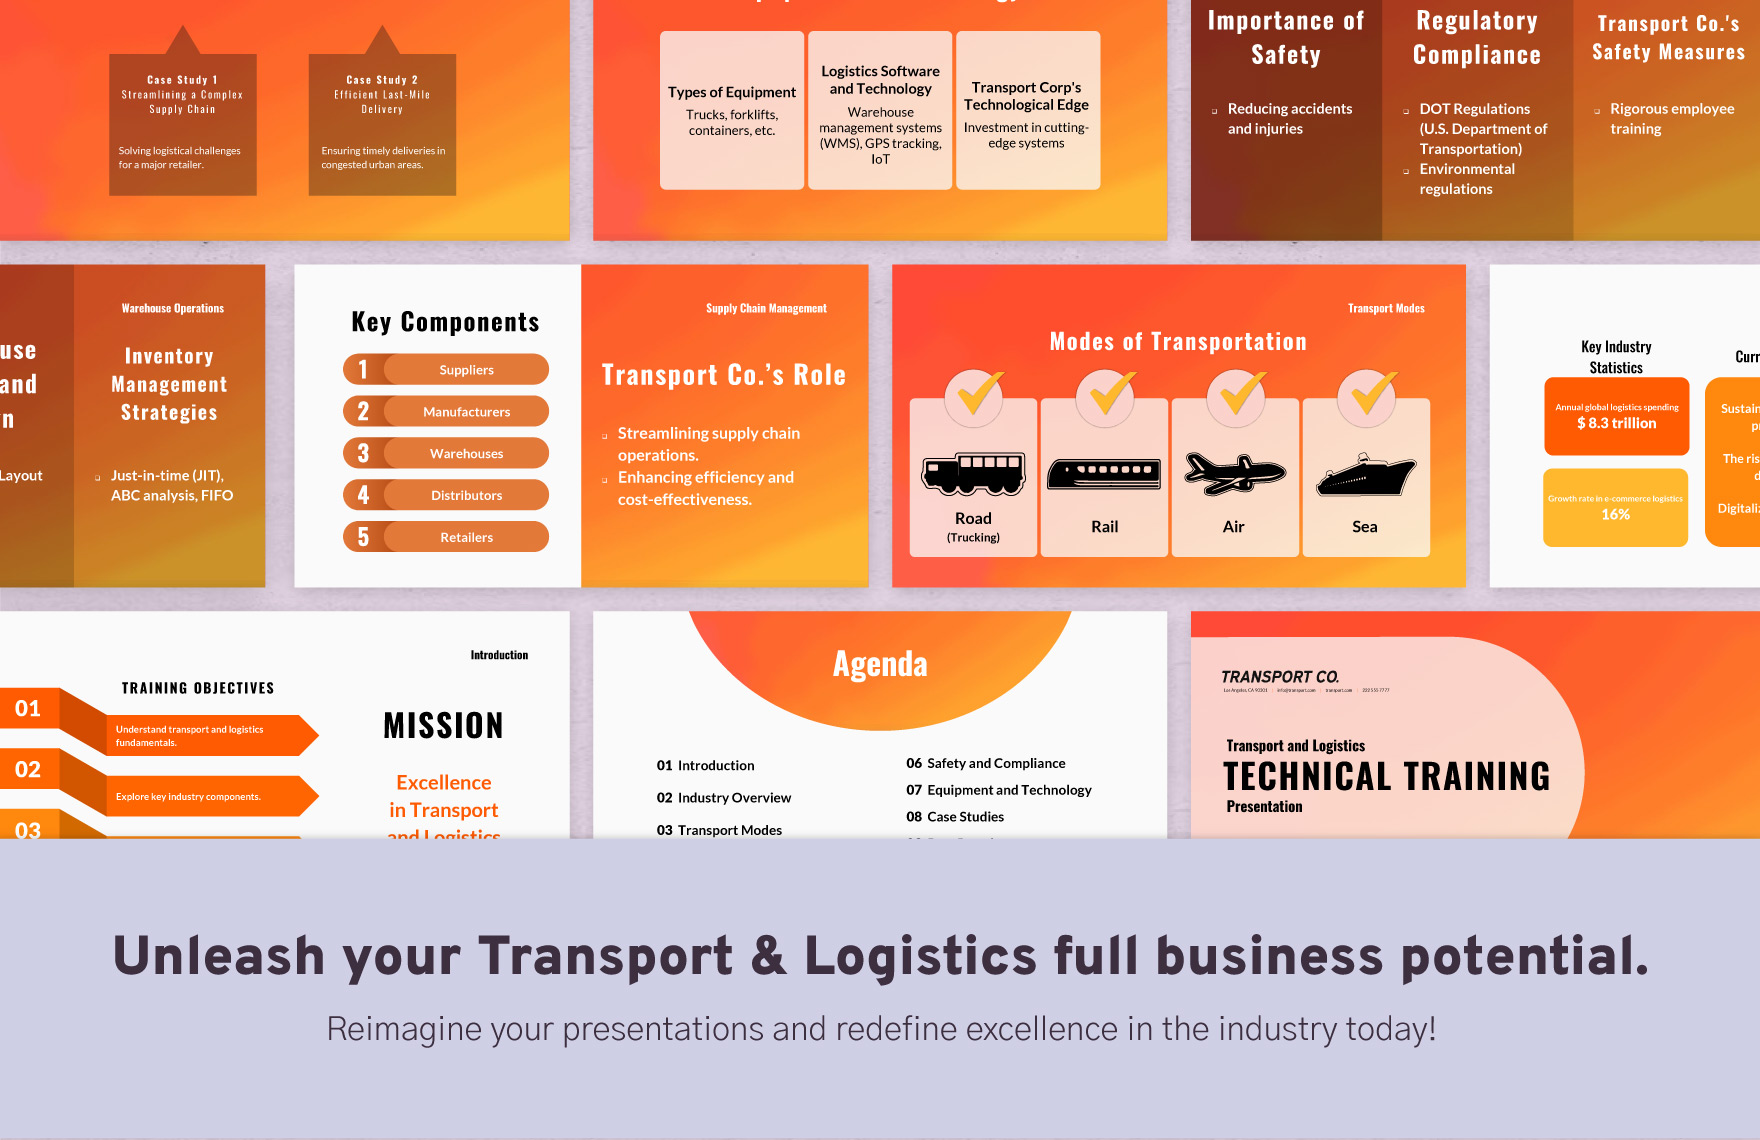 Transport and Logistics Technical Training Presentation Template